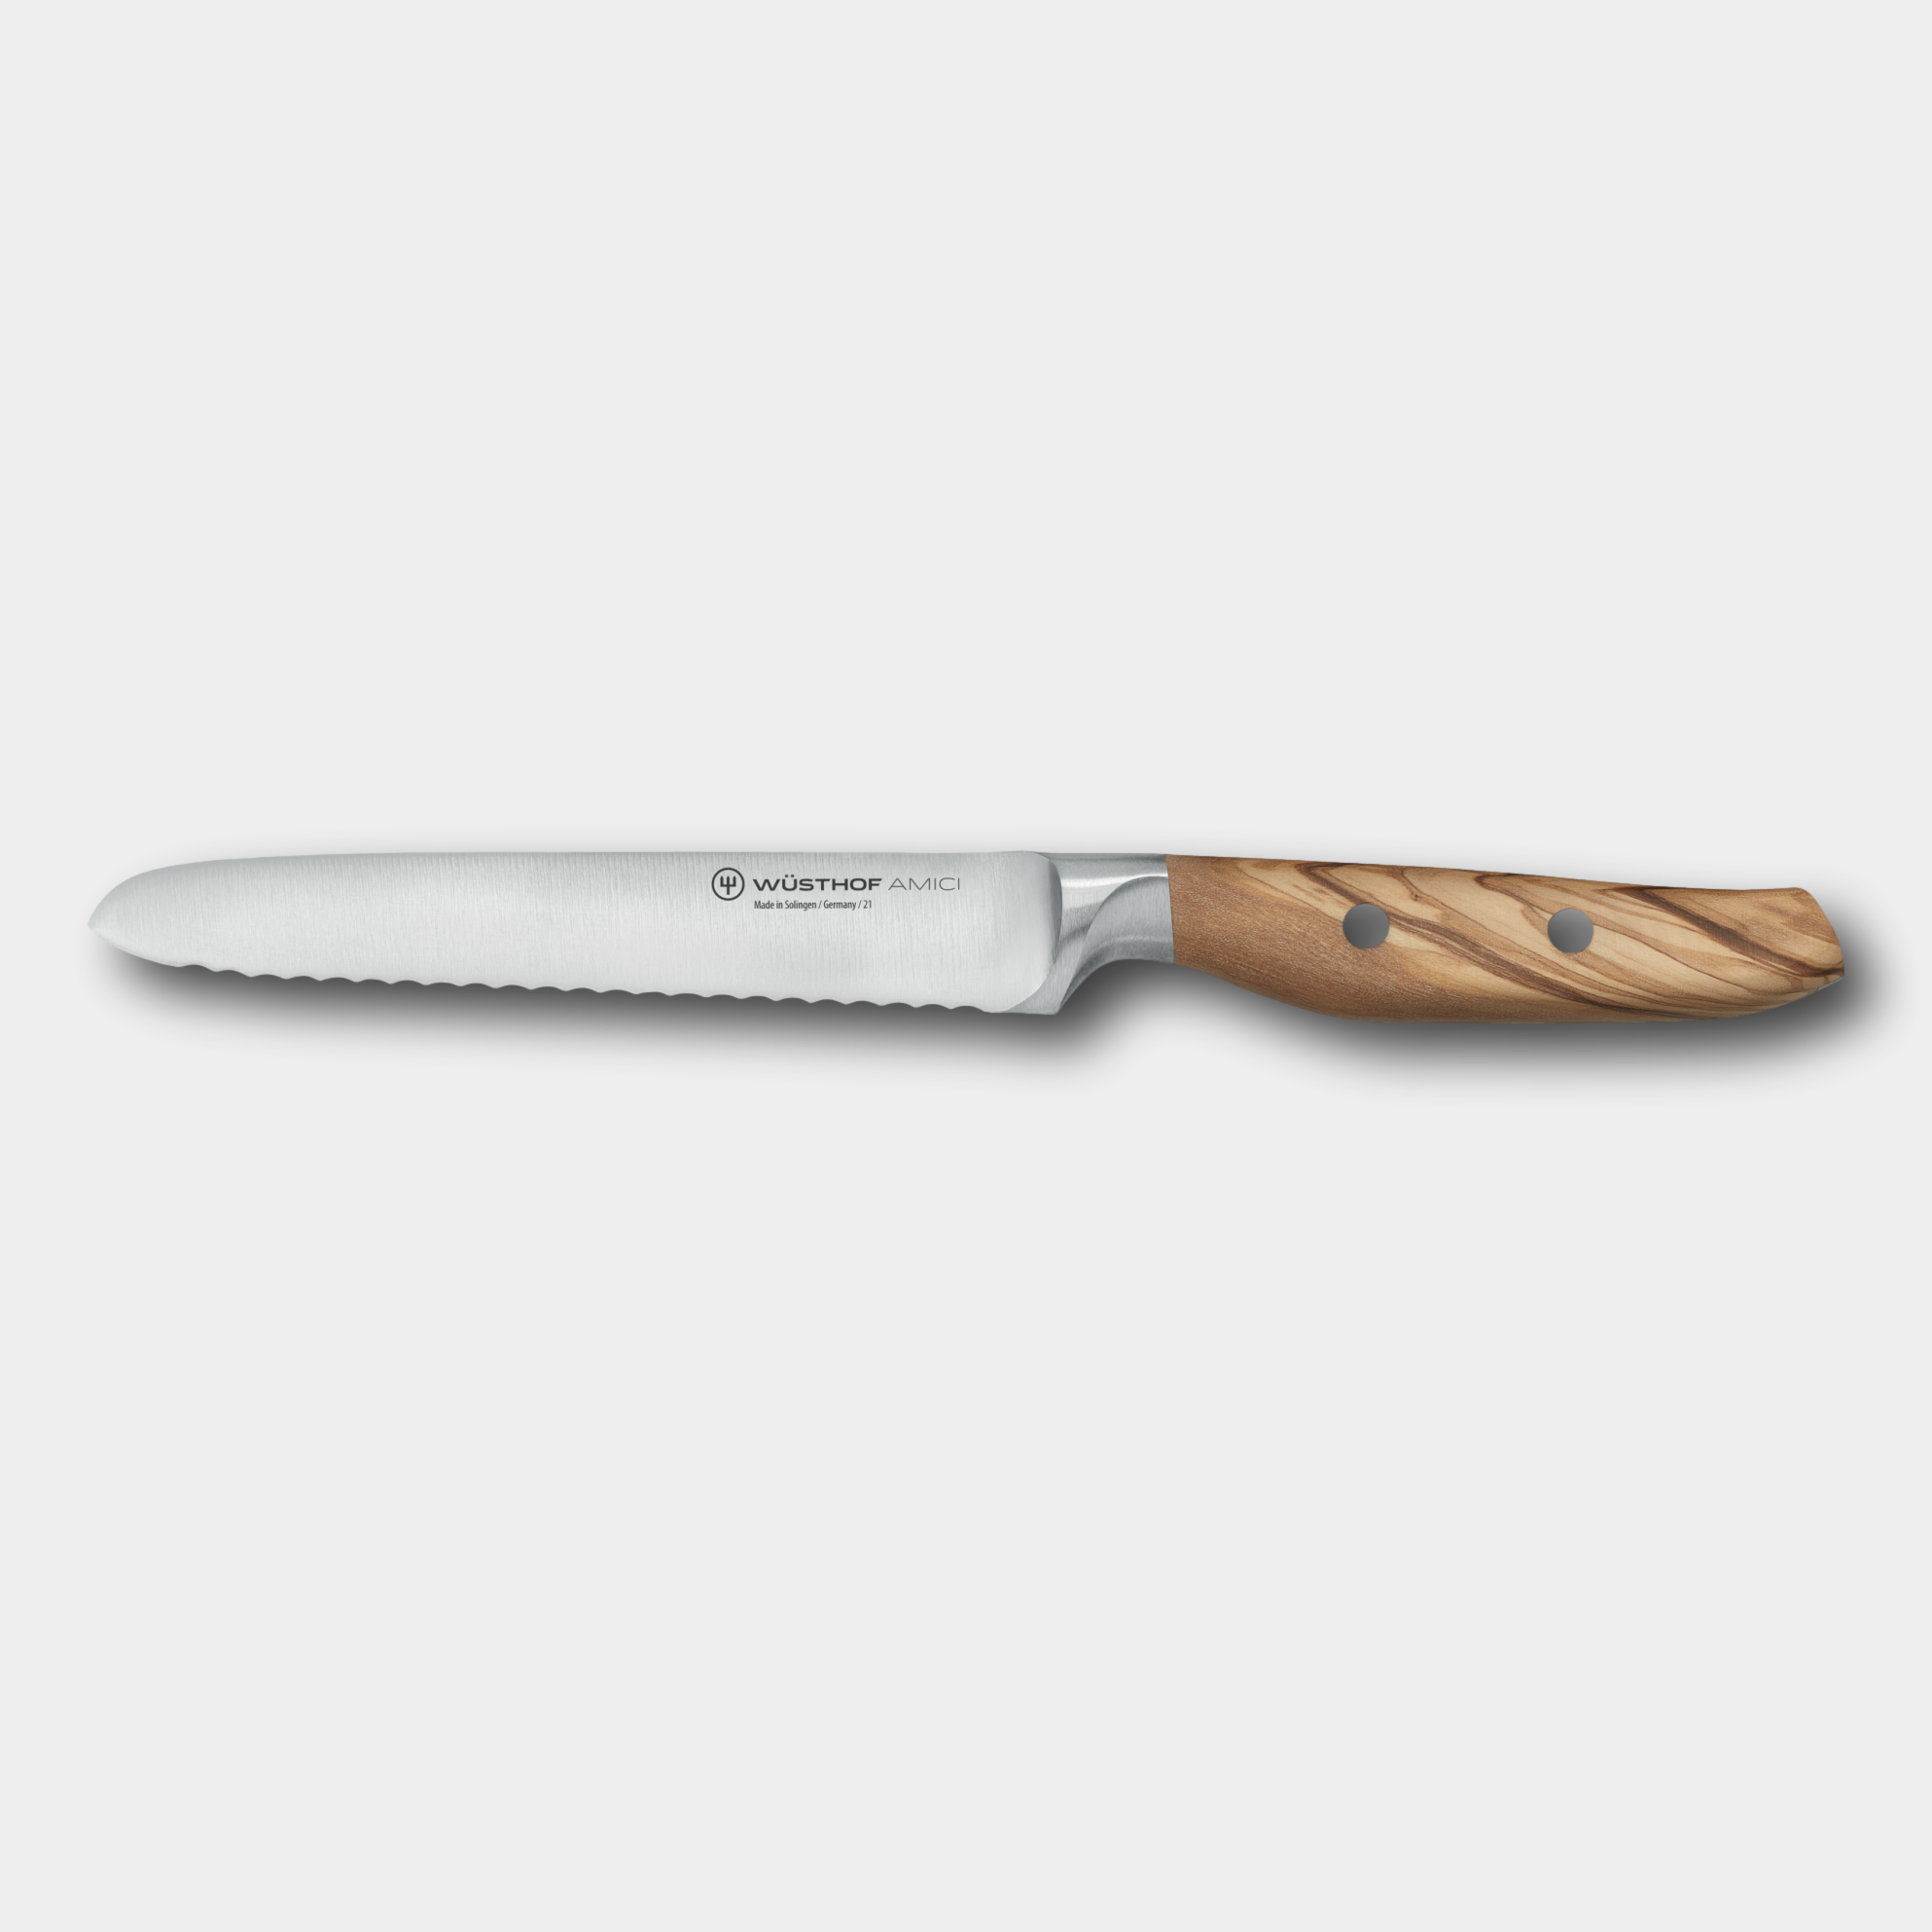 Wusthof Amici 14cm Serrated Utility Knife